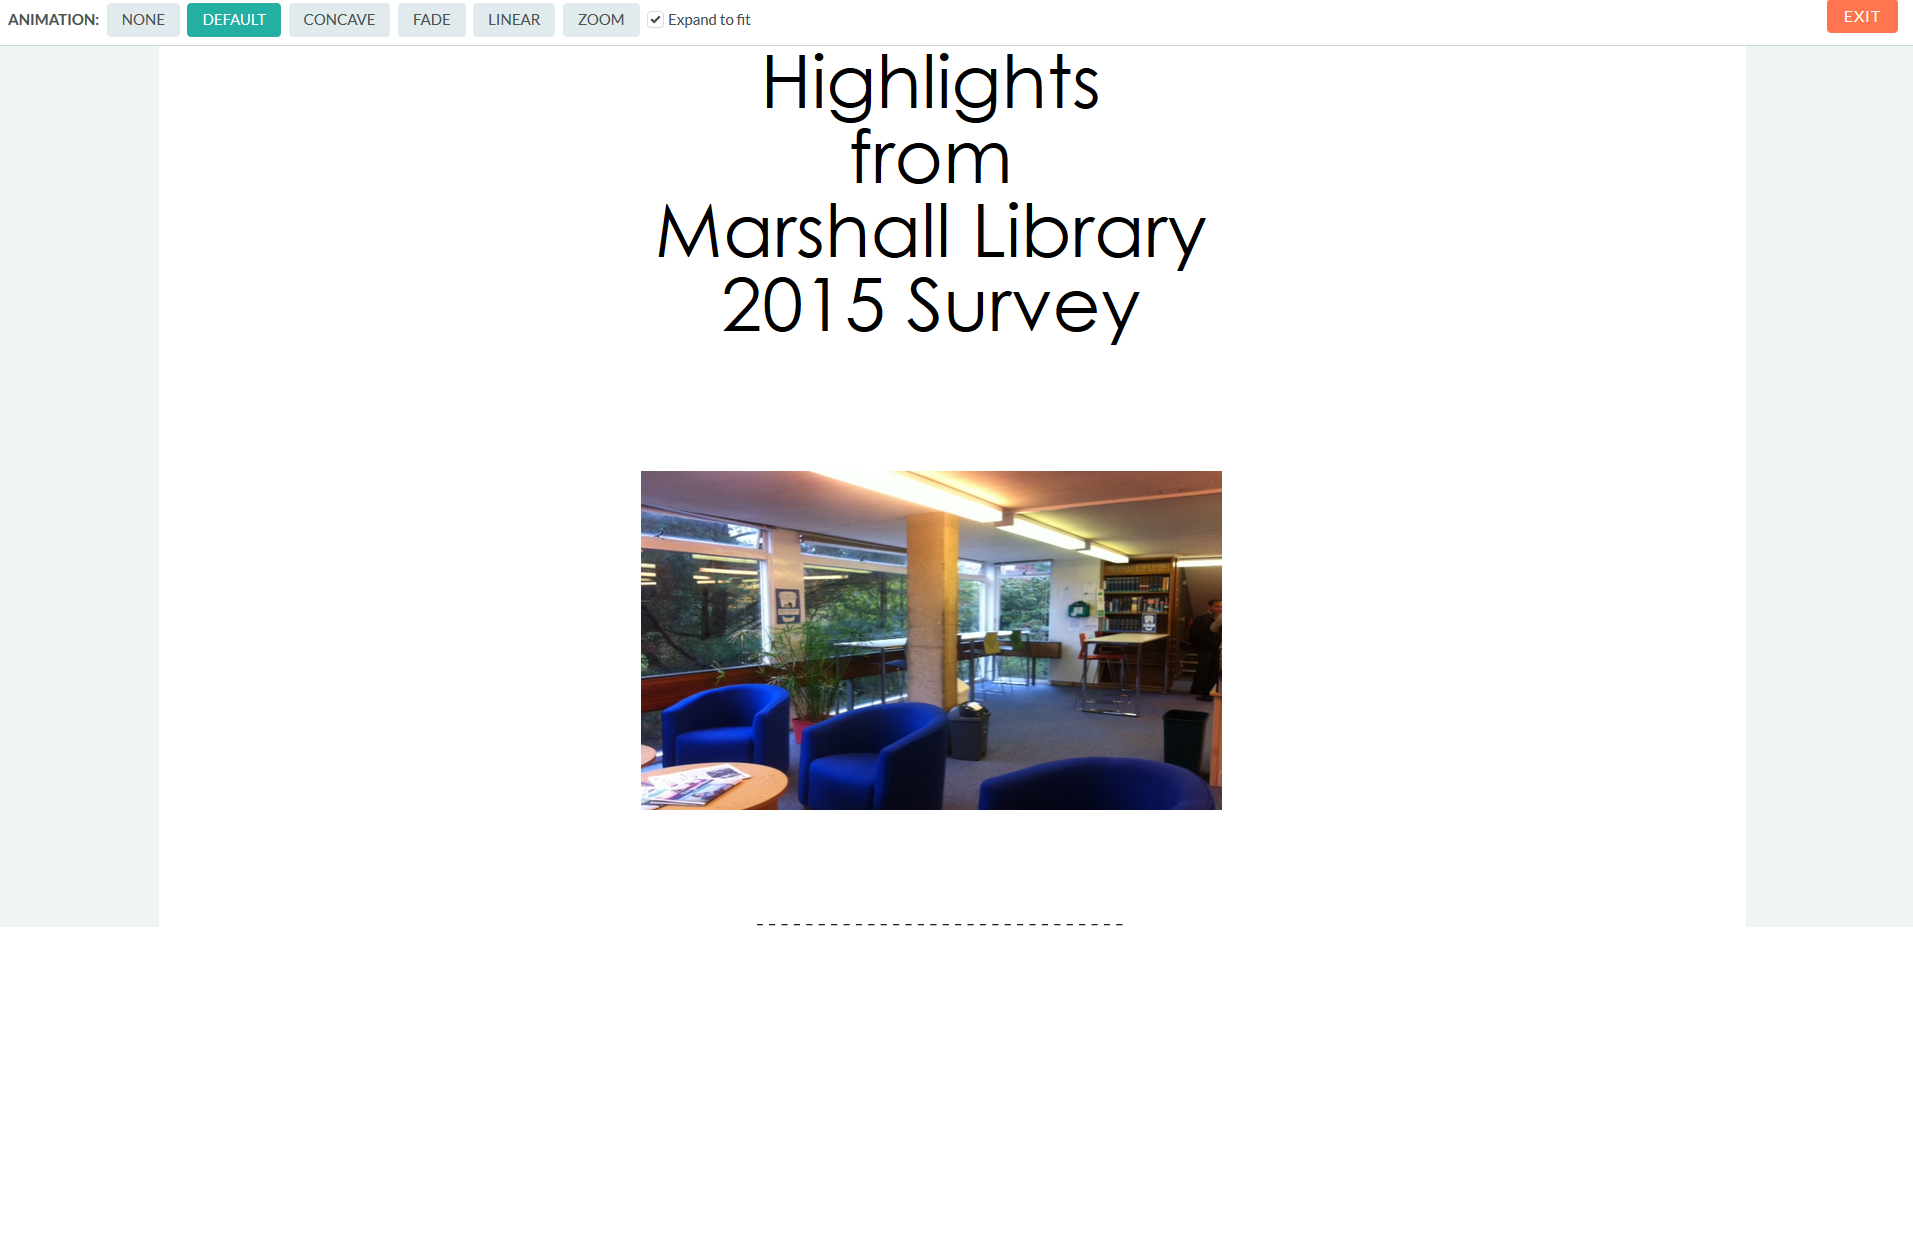 Library Survey 2015: highlights